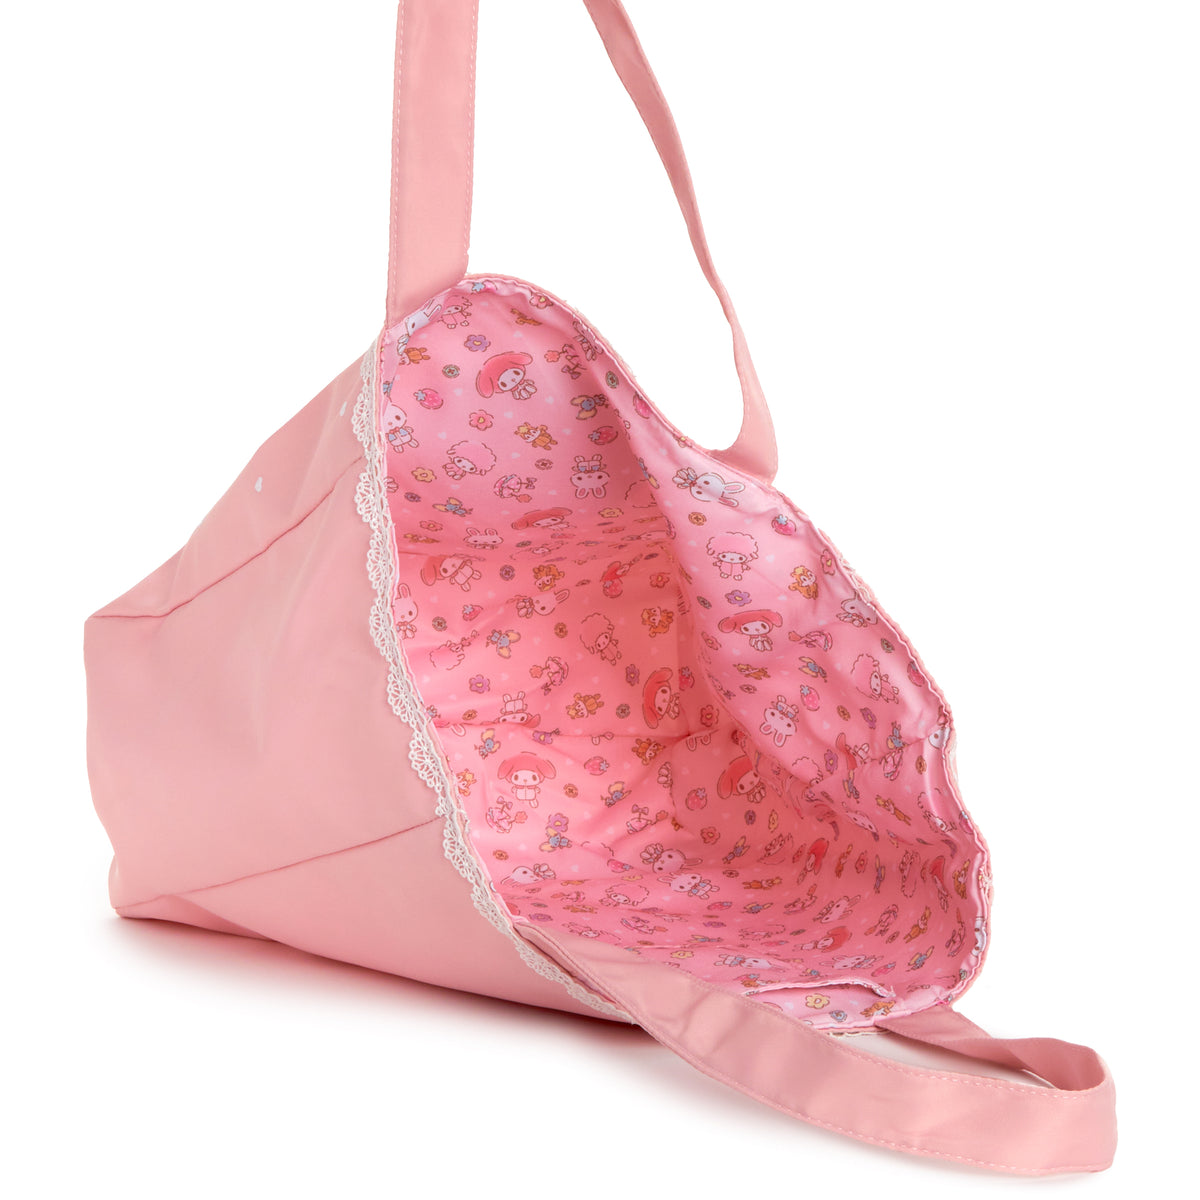 Linen Bag | Linen Tote Bags in Ash Rose | MagicLinen